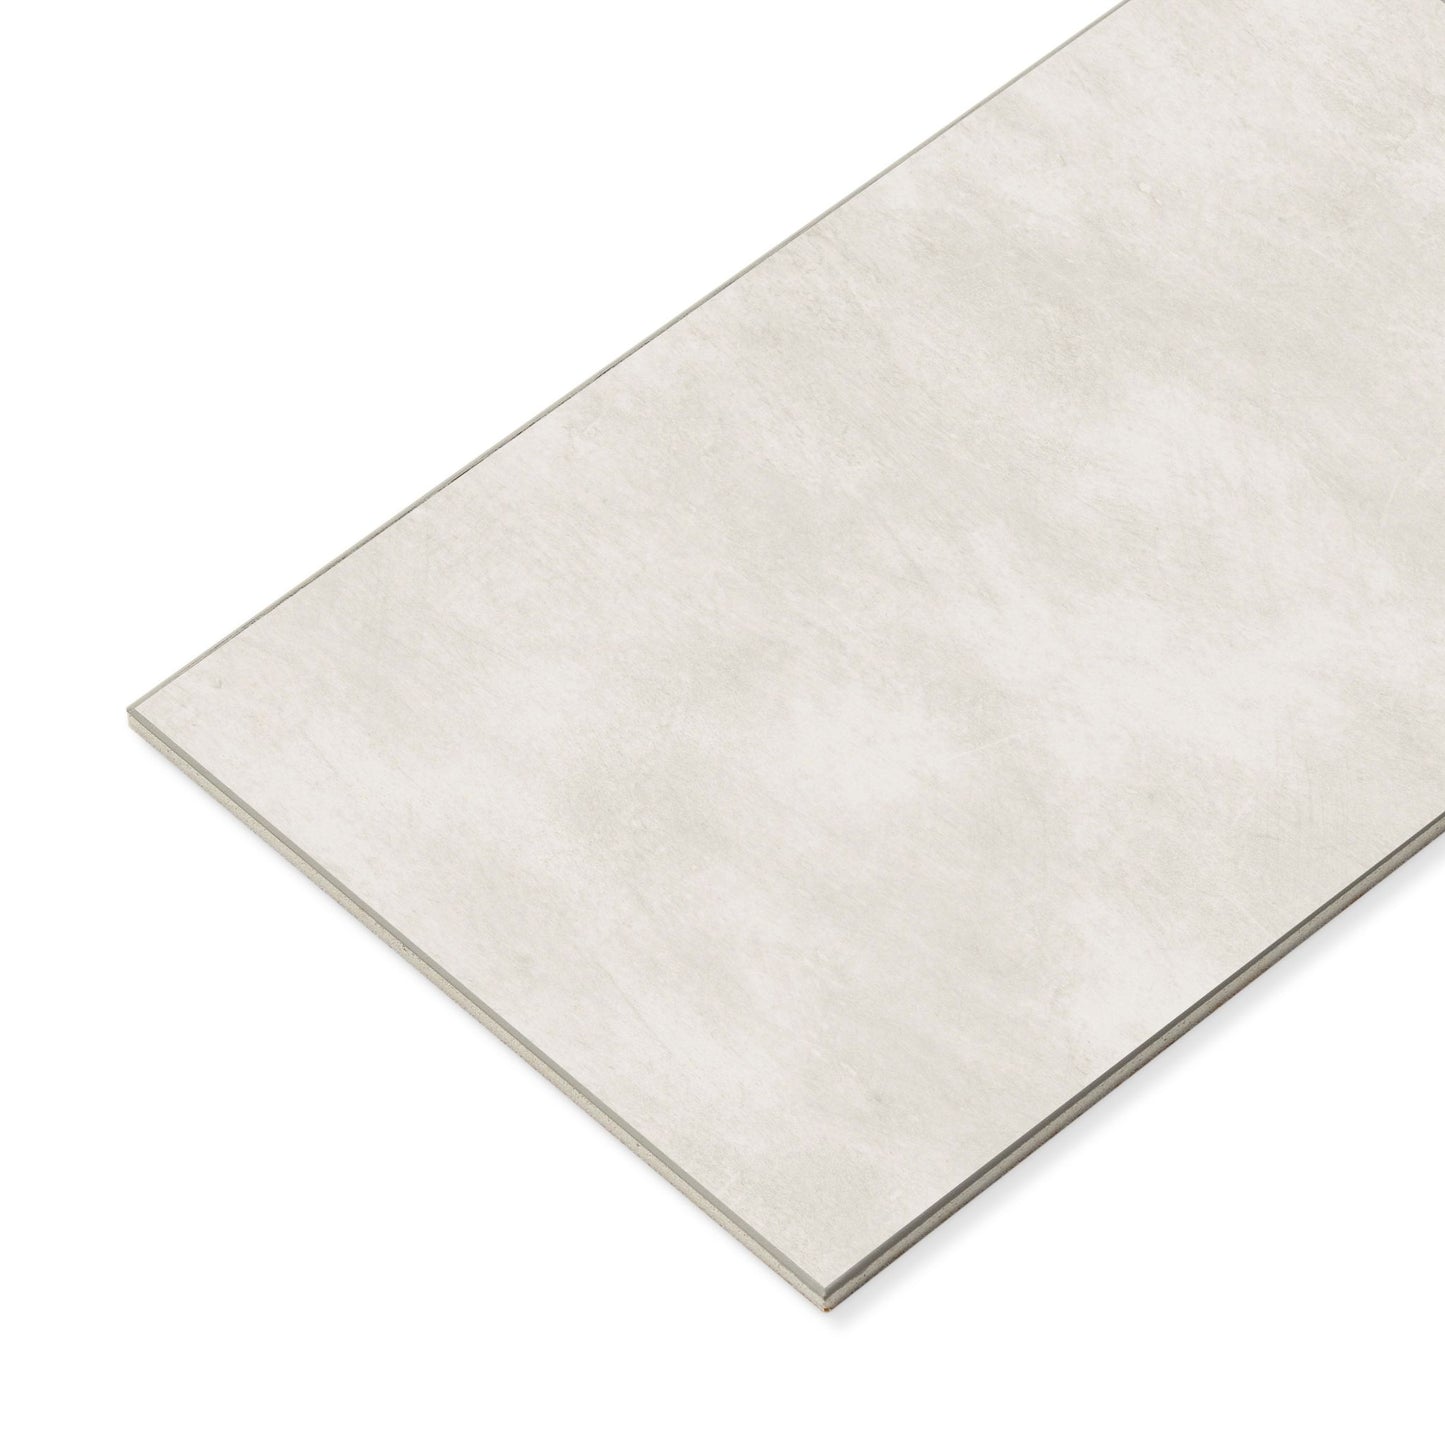 StickWall White Mist Panels - 1.6m2 & 1.7m2 Packs